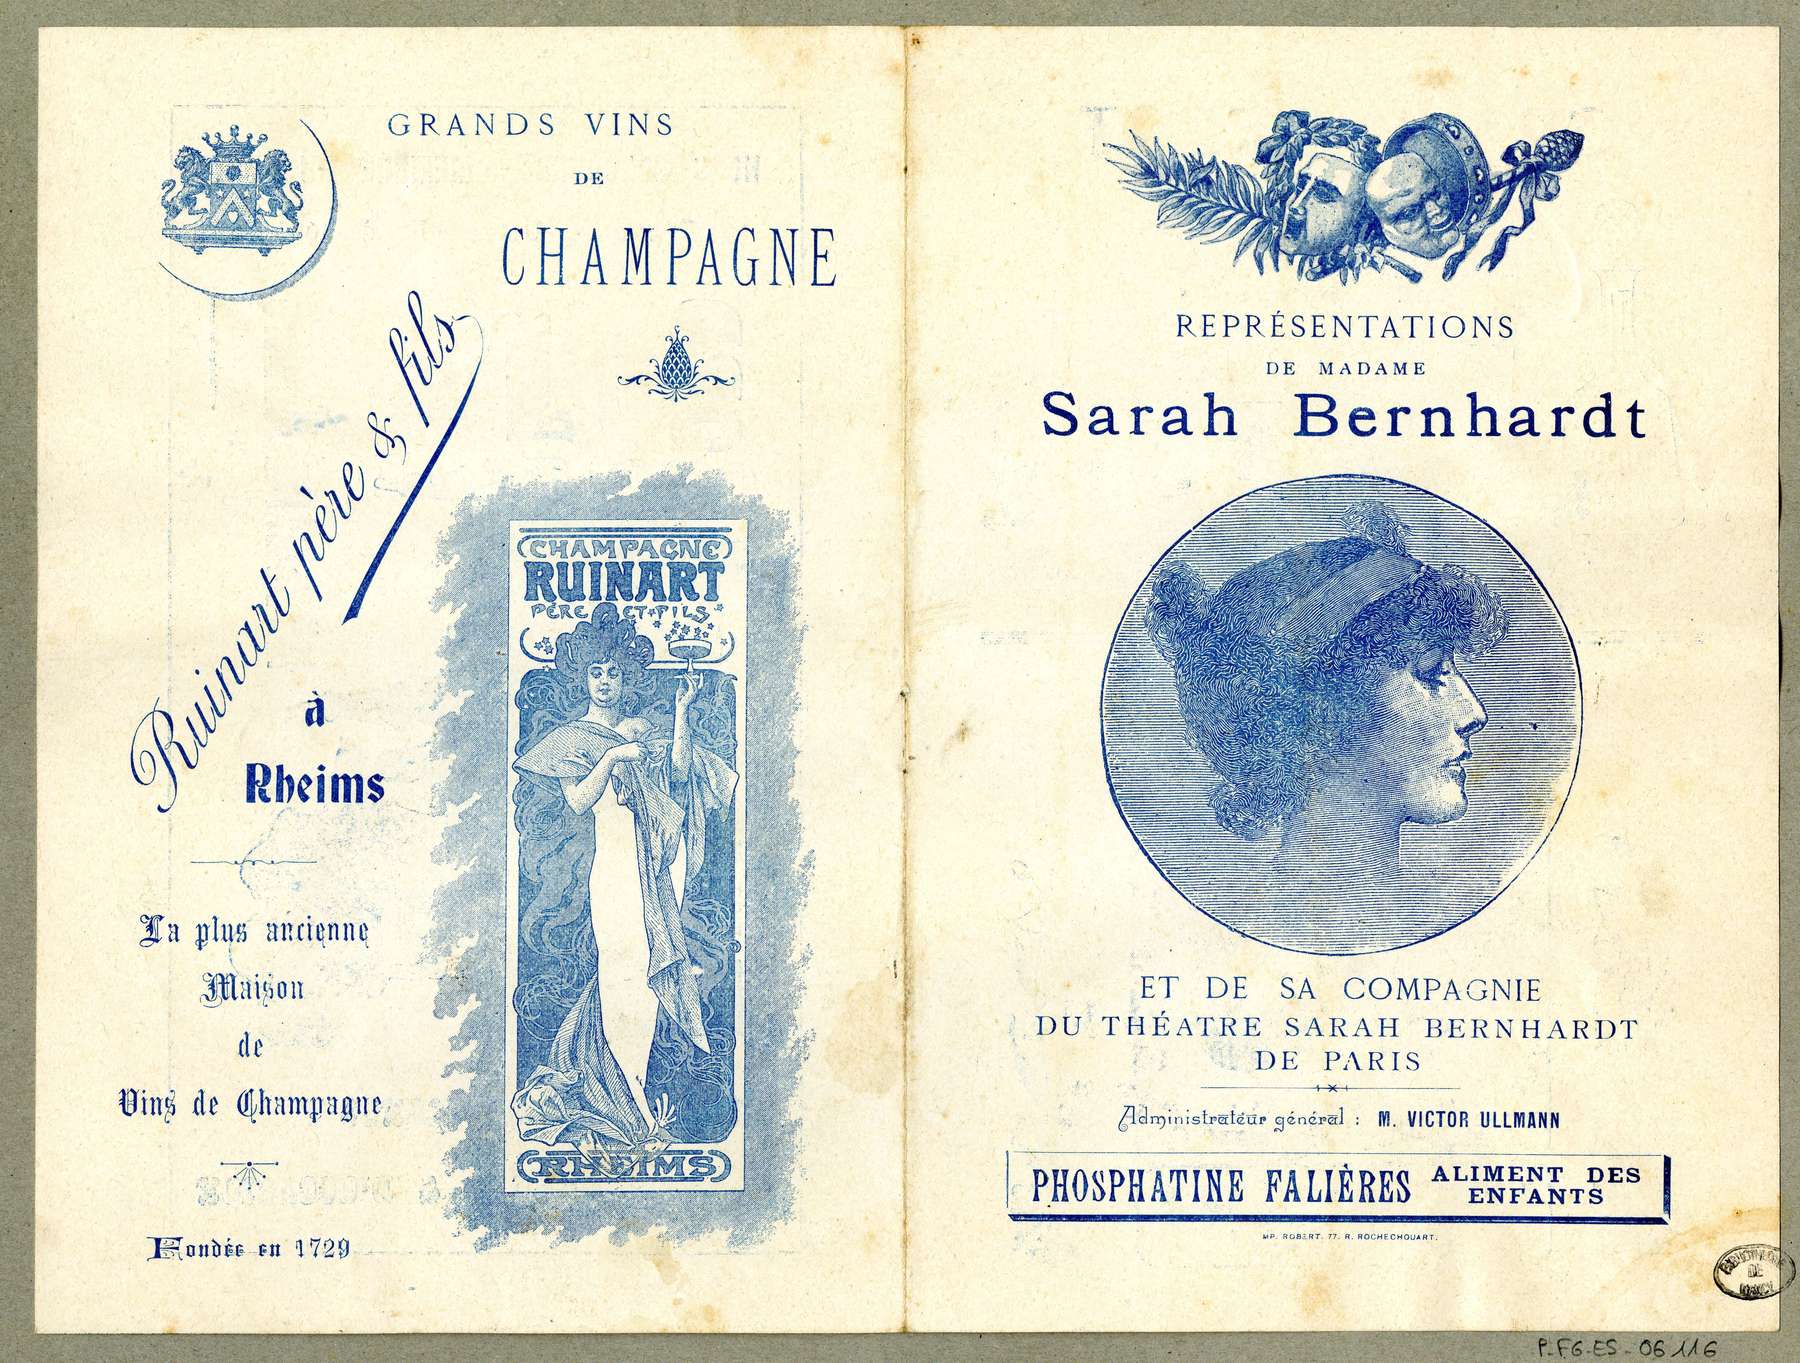 Contenu du Représentations de madame Sarah Bernhardt